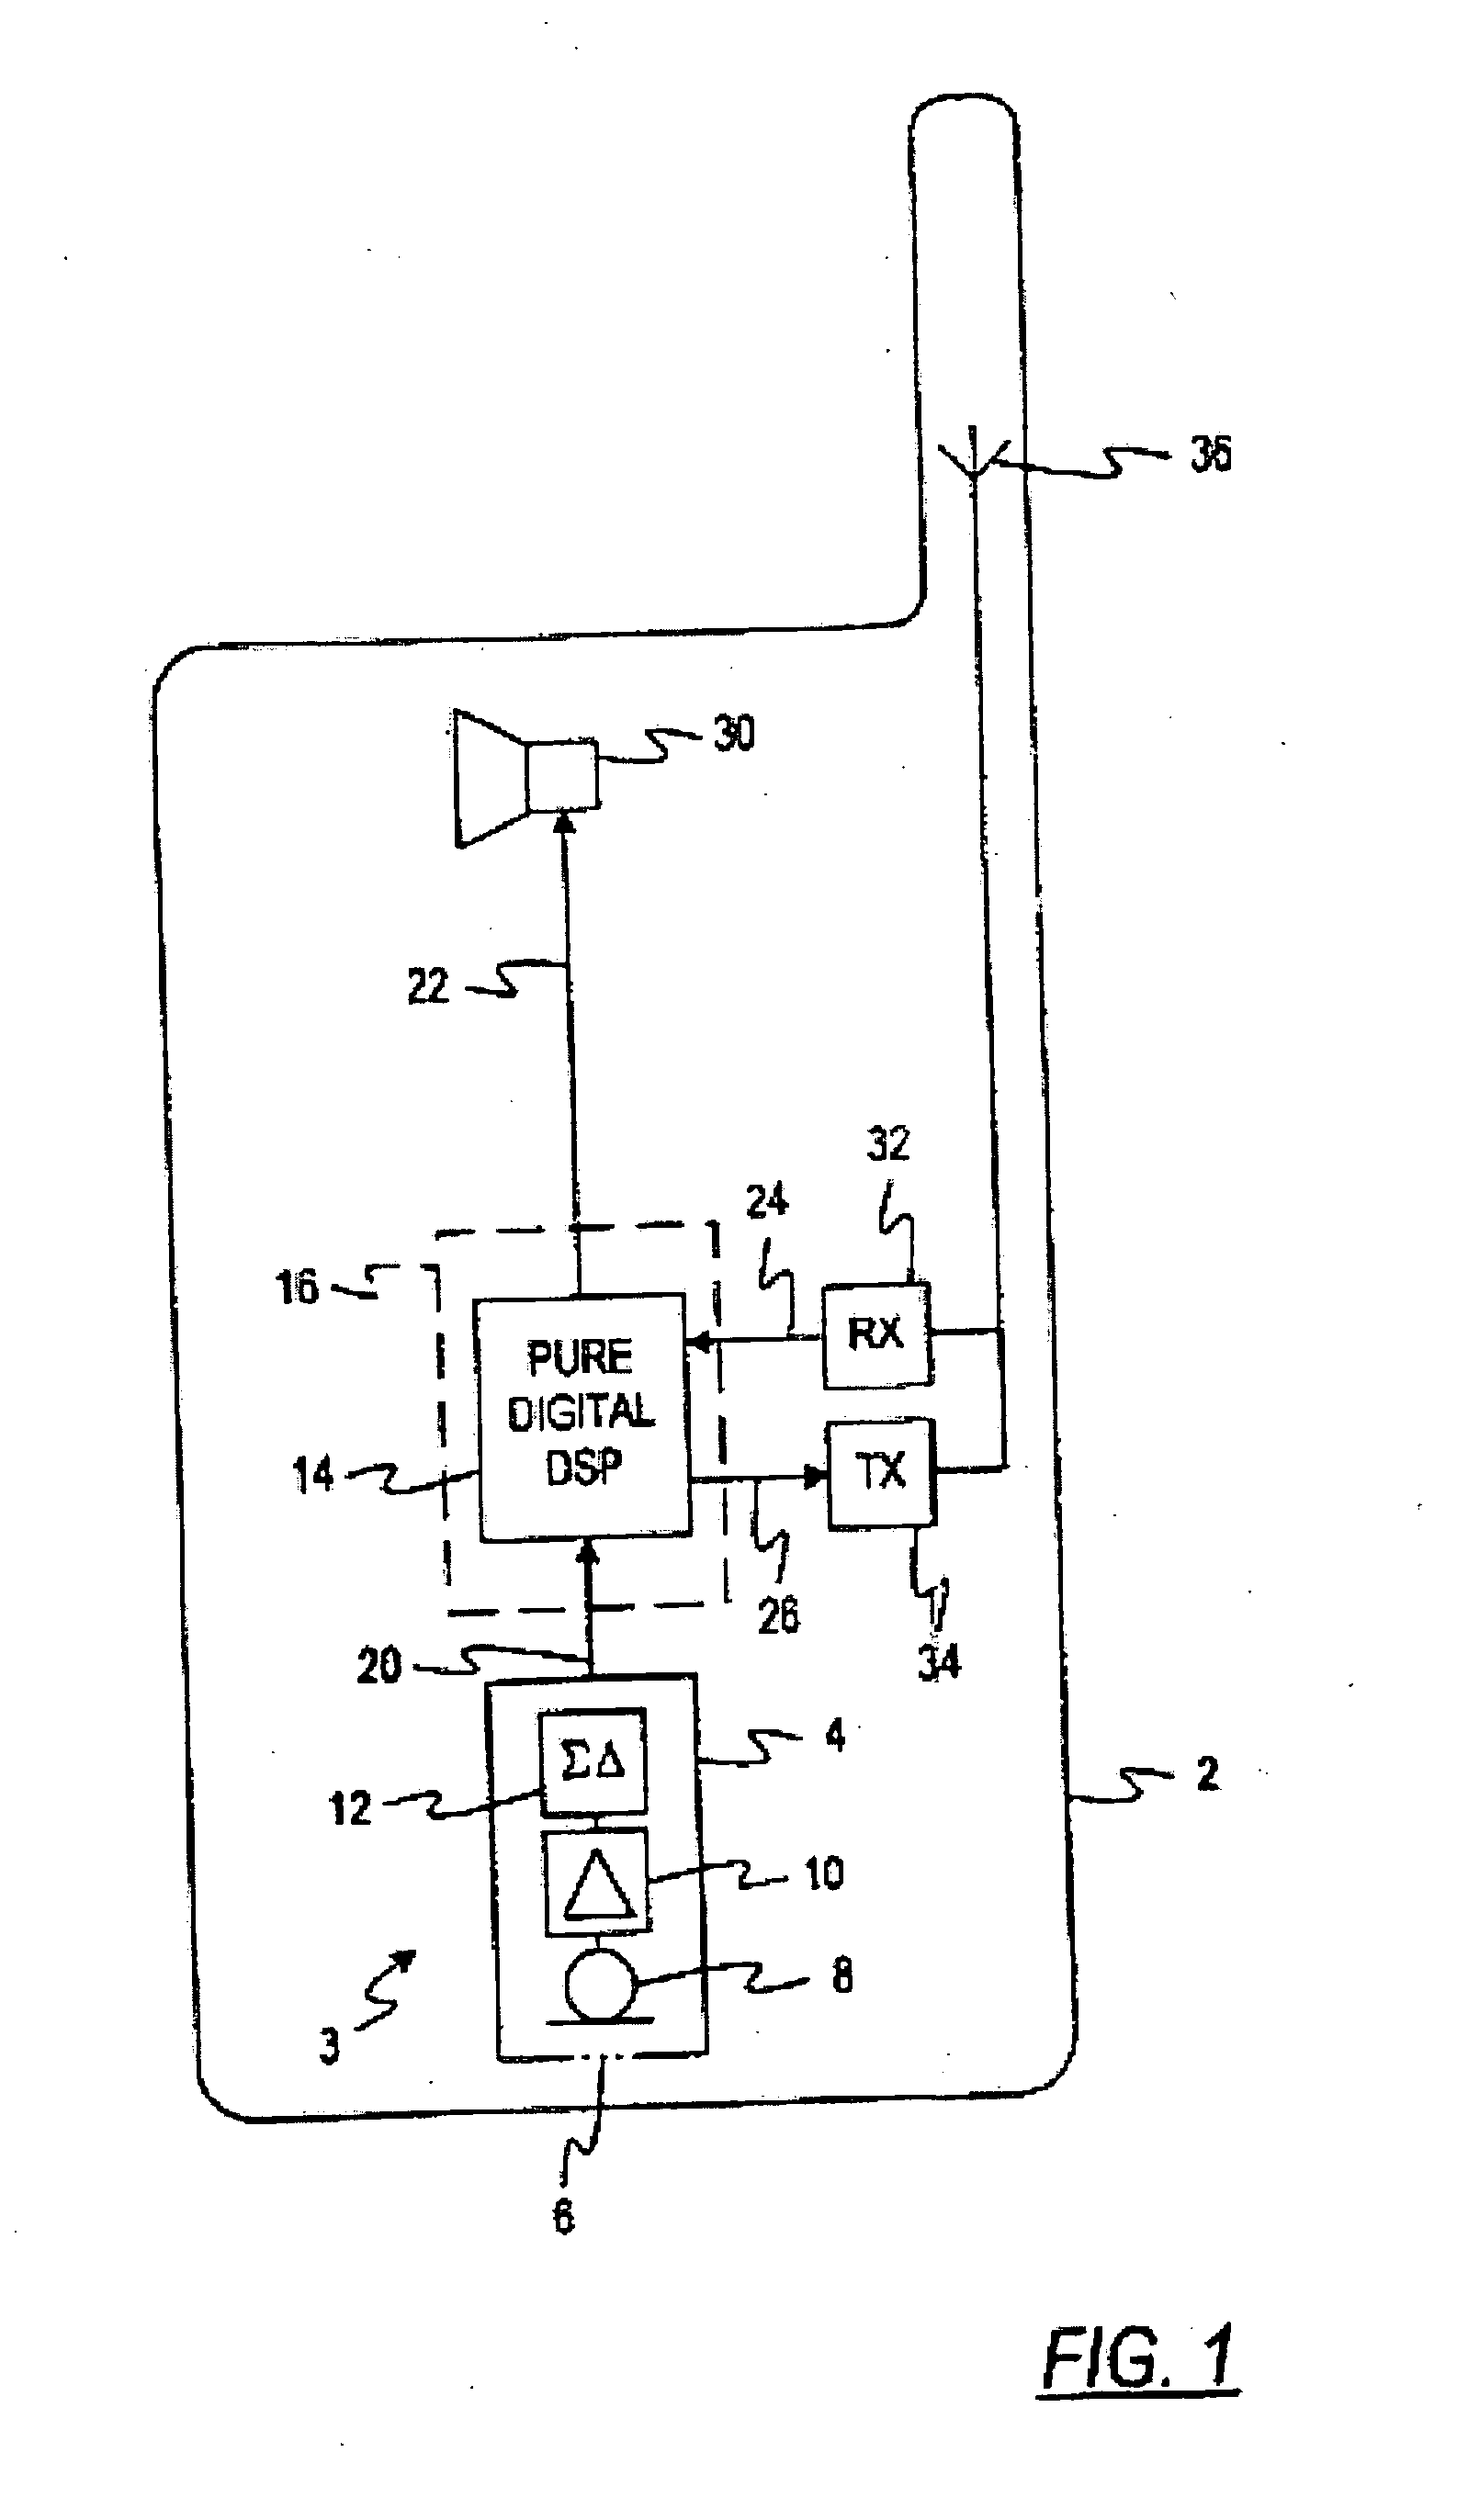 Microphone unit with internal A/D converter